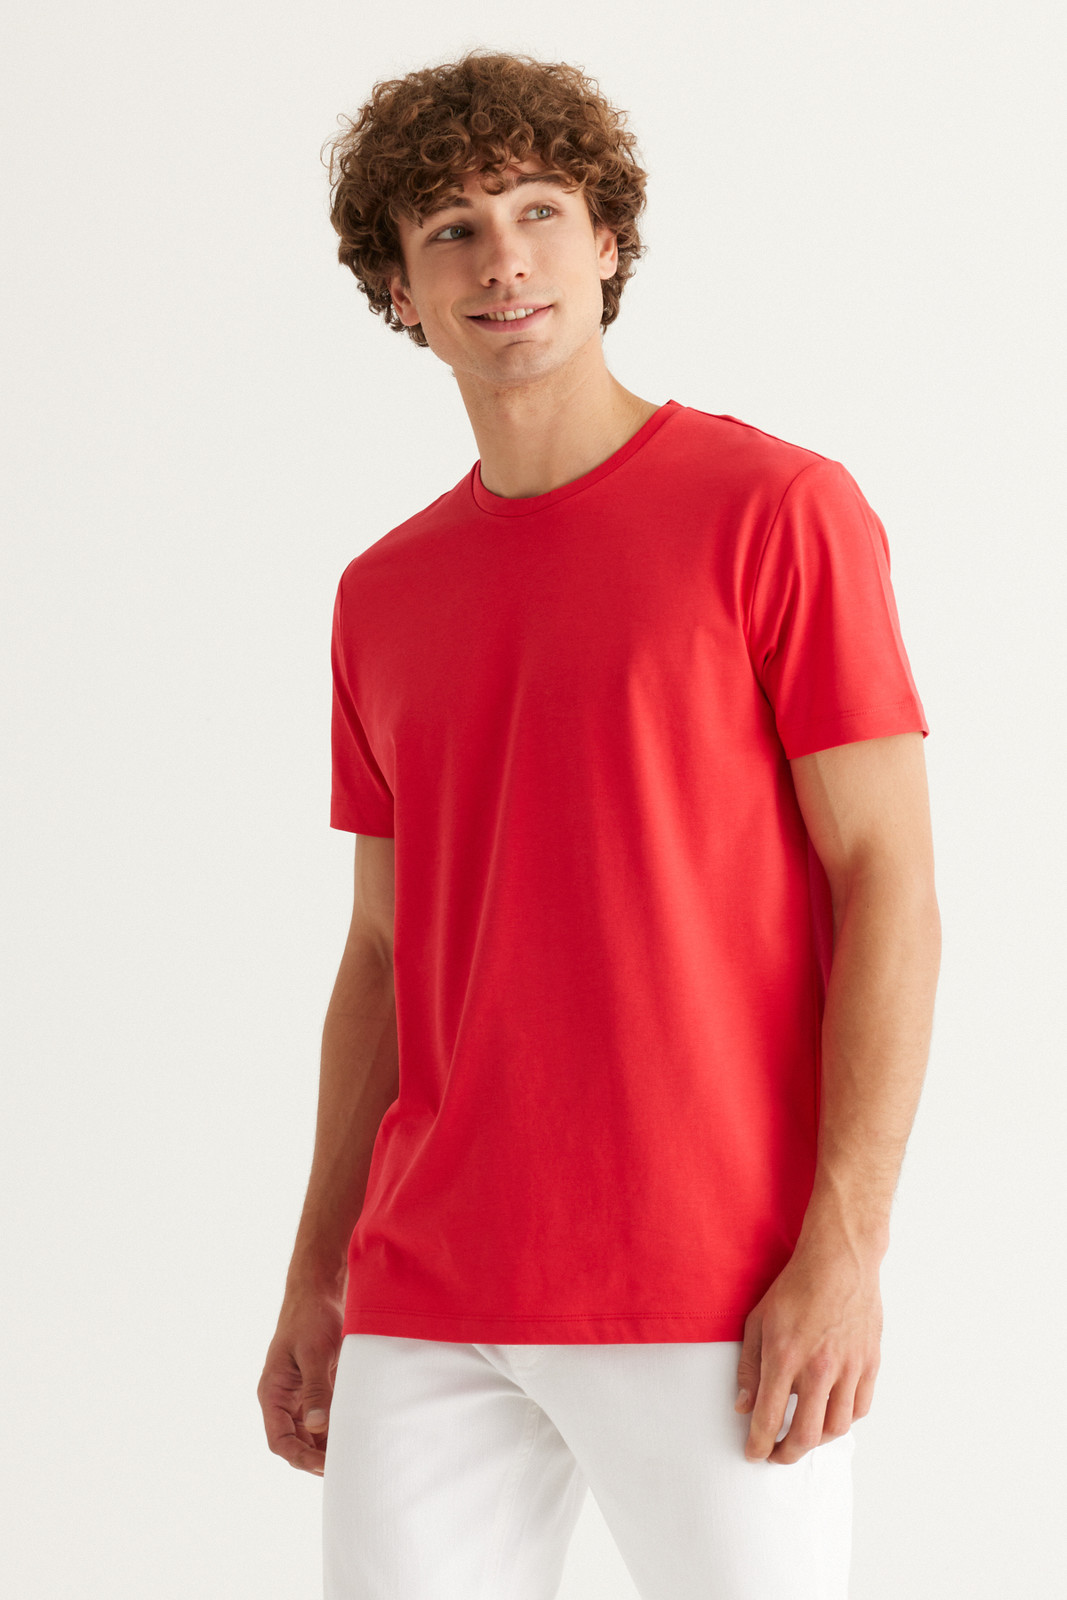 ALTINYILDIZ CLASSICS Men's Pomegranate Blossom Slim Fit Slim Fit Crew Neck Cotton Short Sleeve T-Shirt